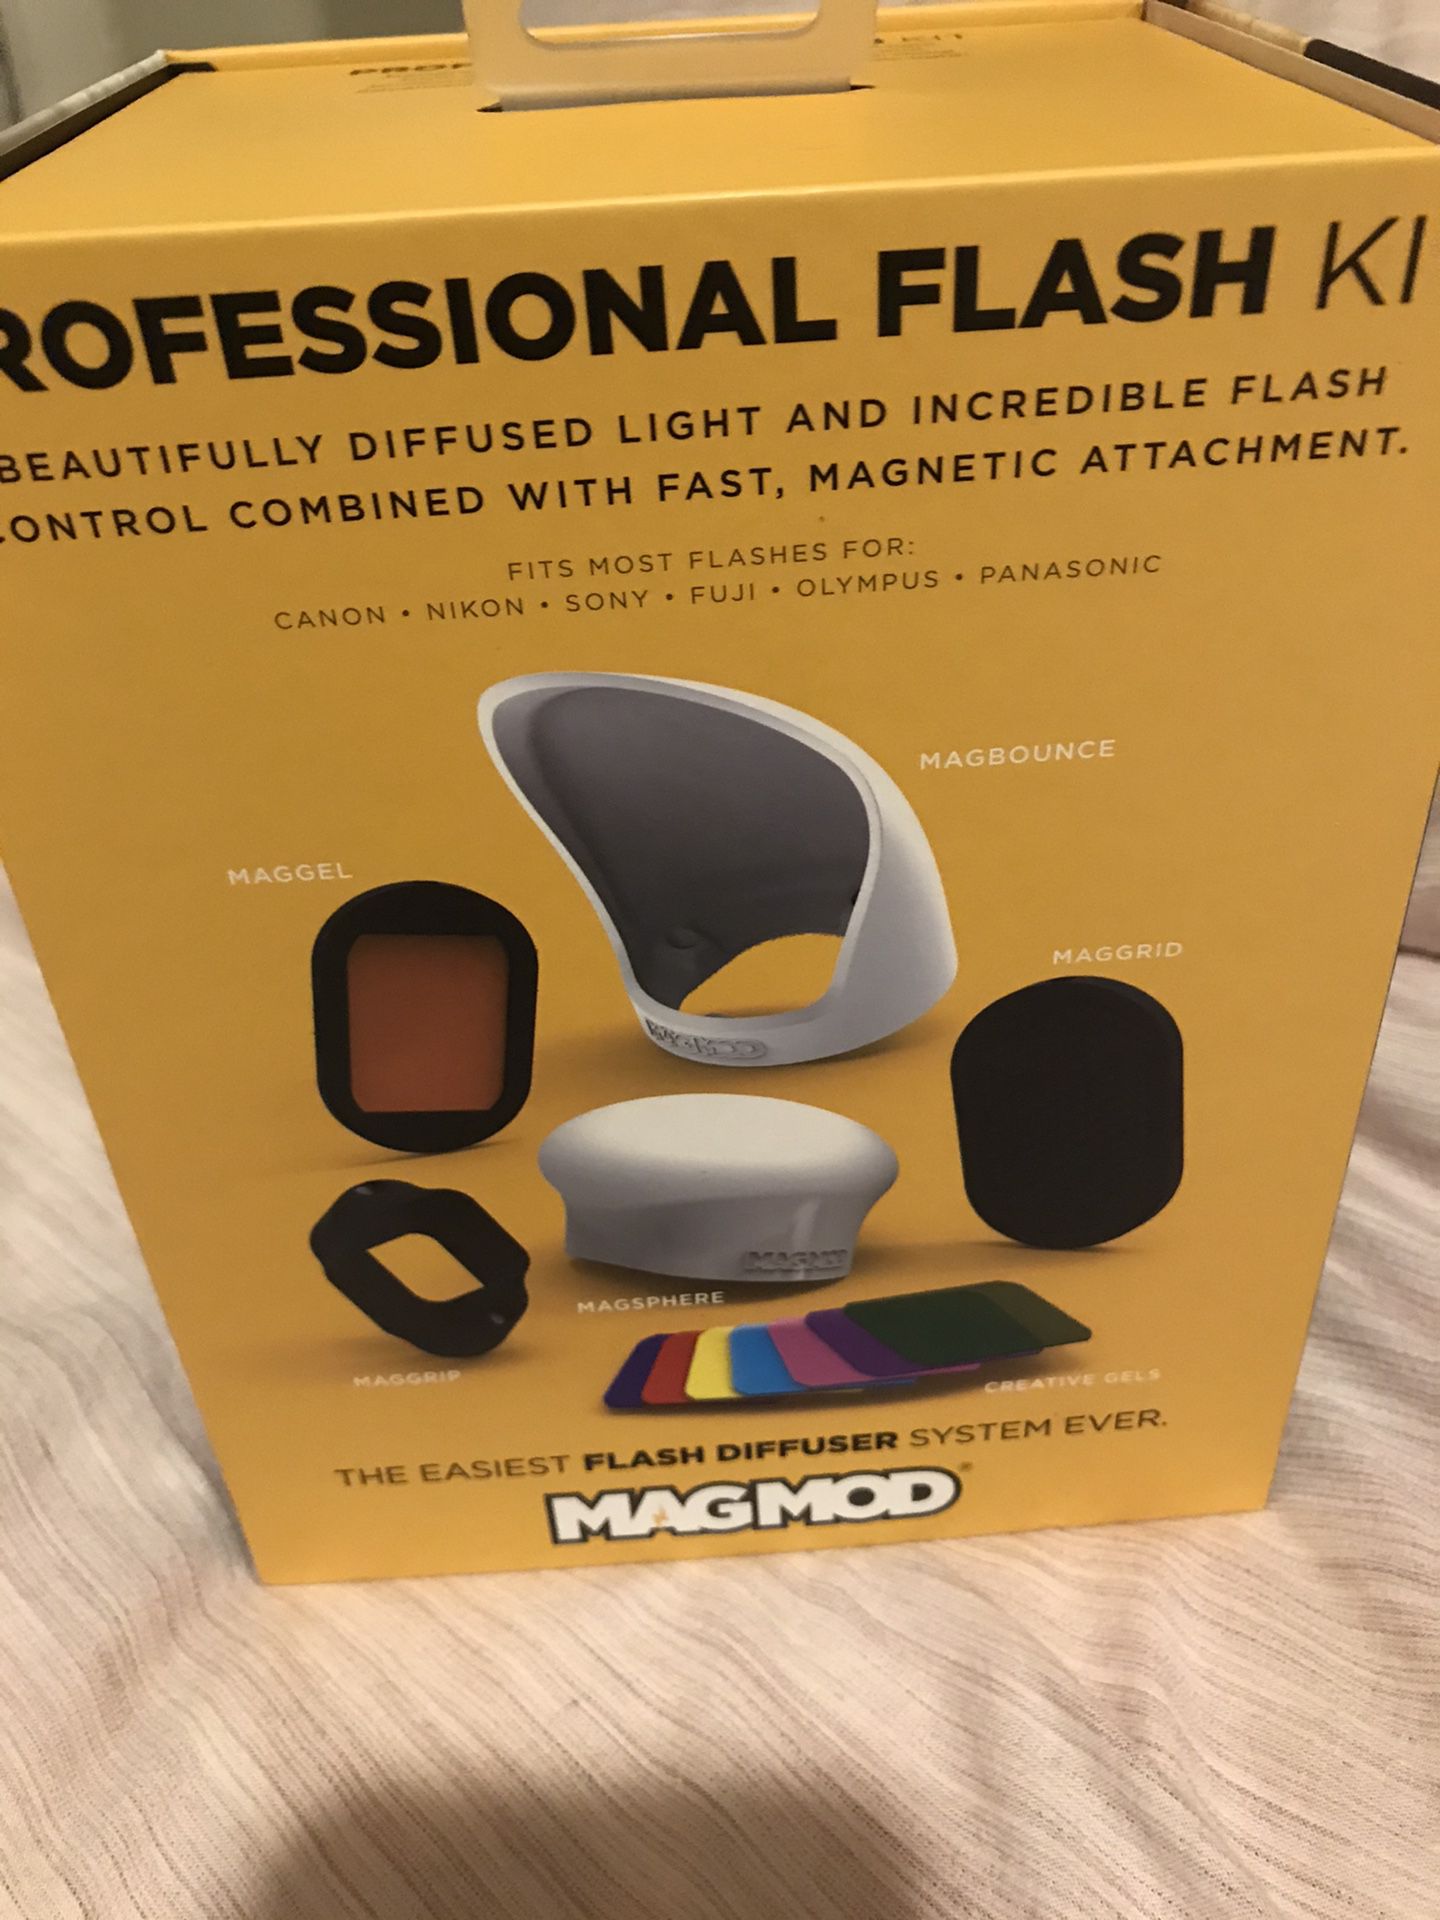 Magmod professional flash kit